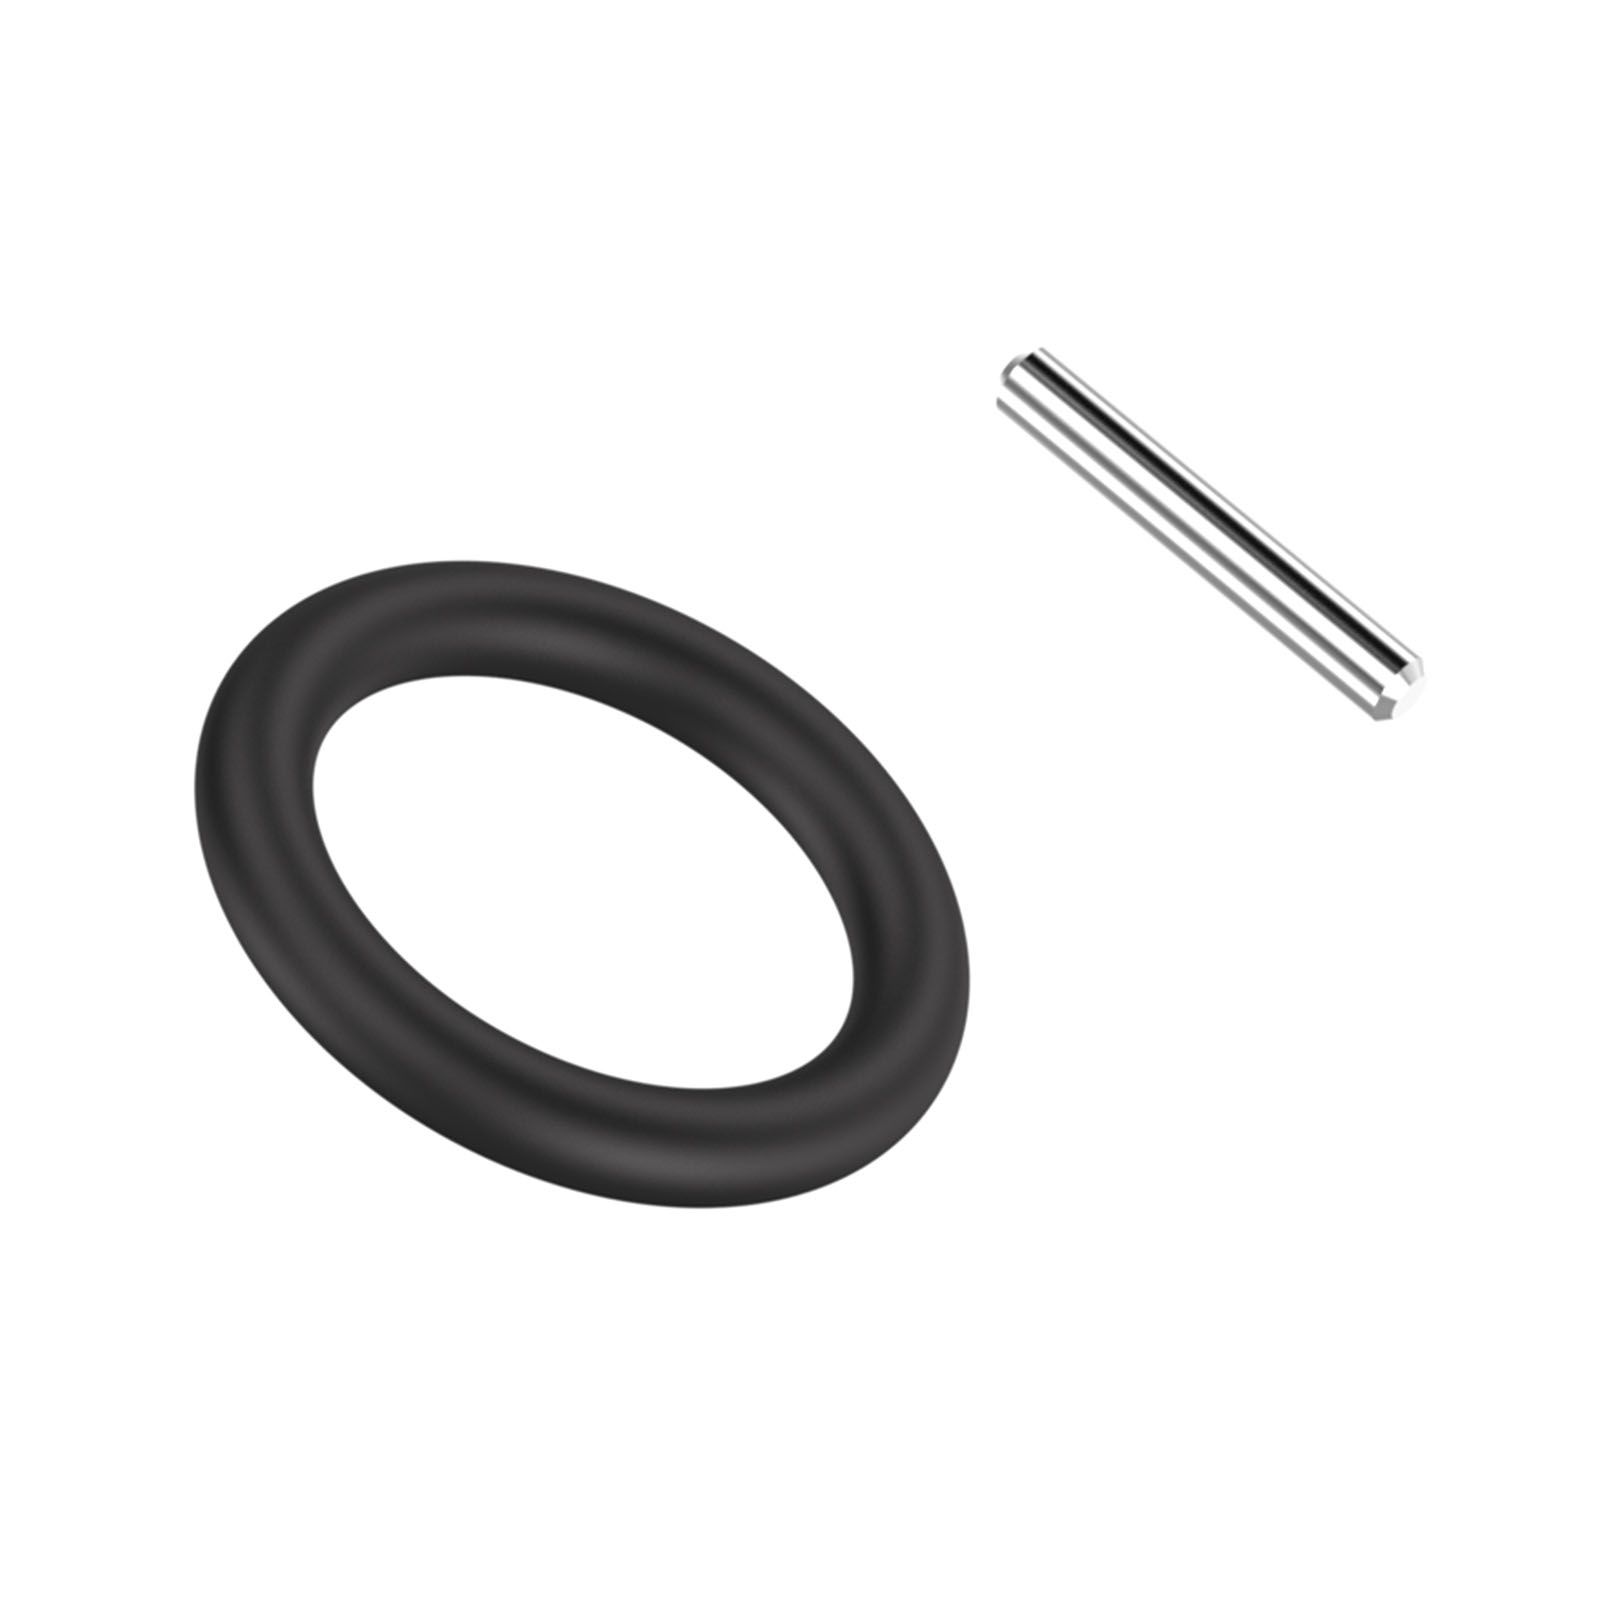 Pin and O-ring set-SQ1/2-d25 product photo